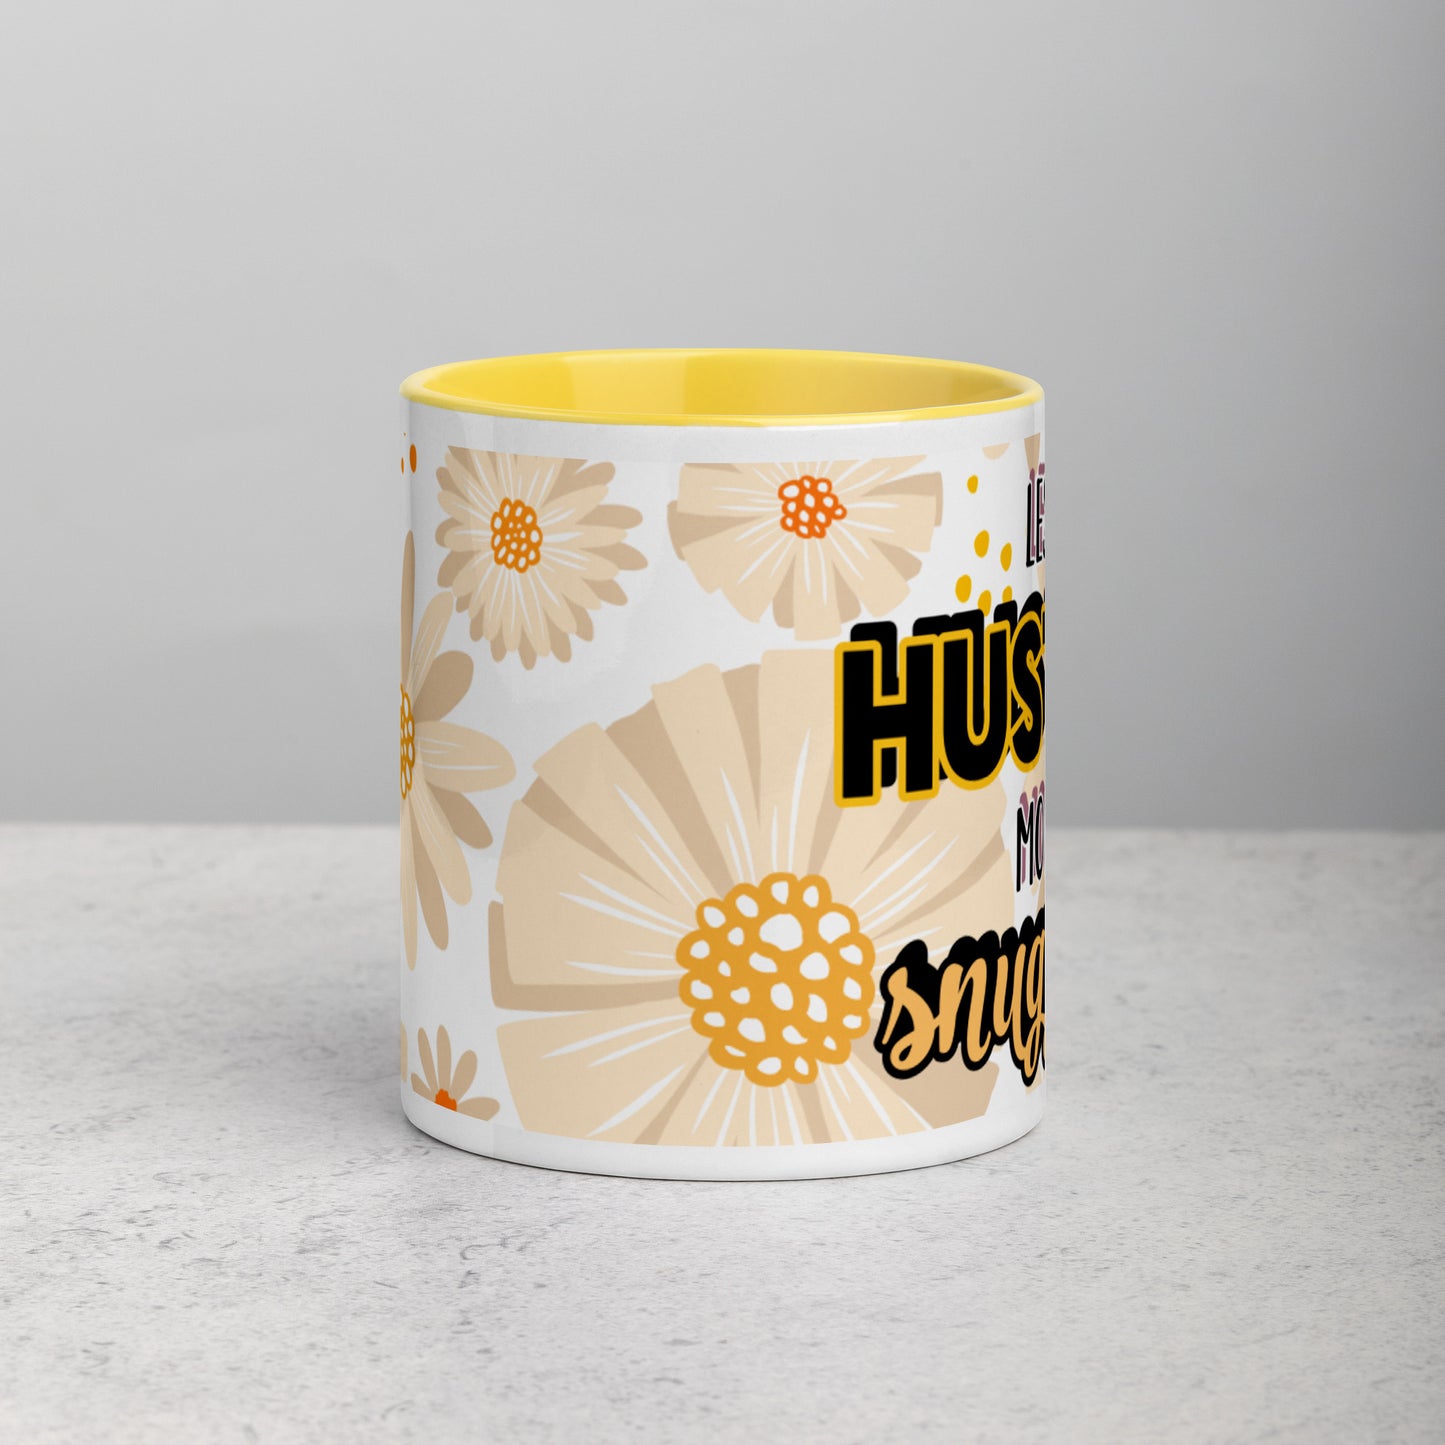 Less Hustle, More Snuggles Mug (flowers)